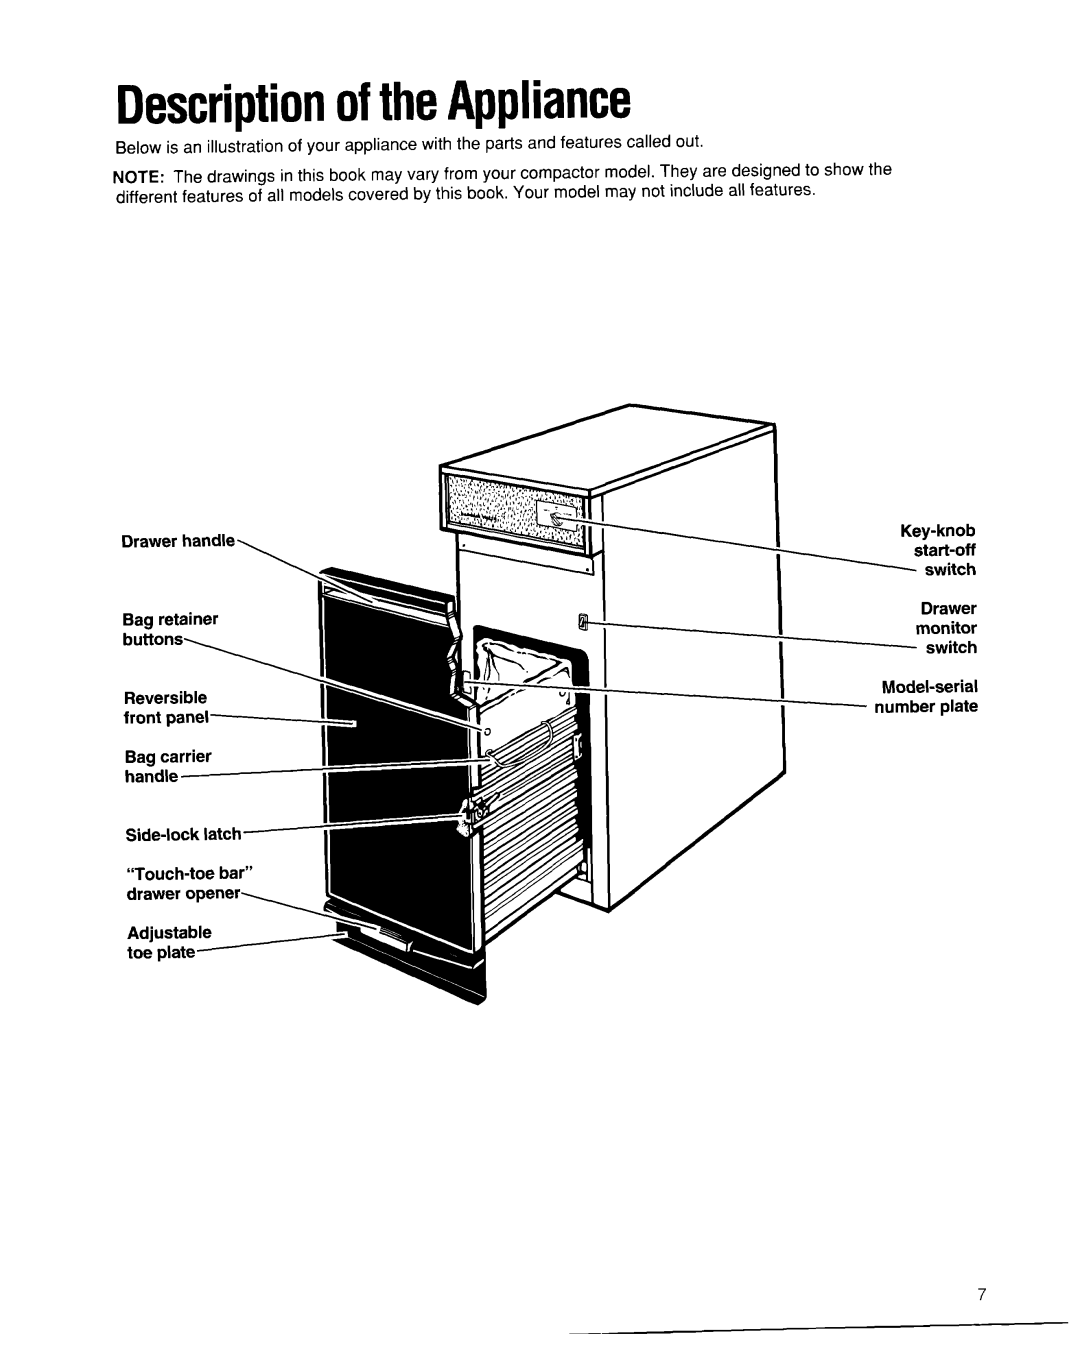 Whirlpool 220-240~volt, 50-Hz Models manual DescriptionoftheAppliance, buGons 